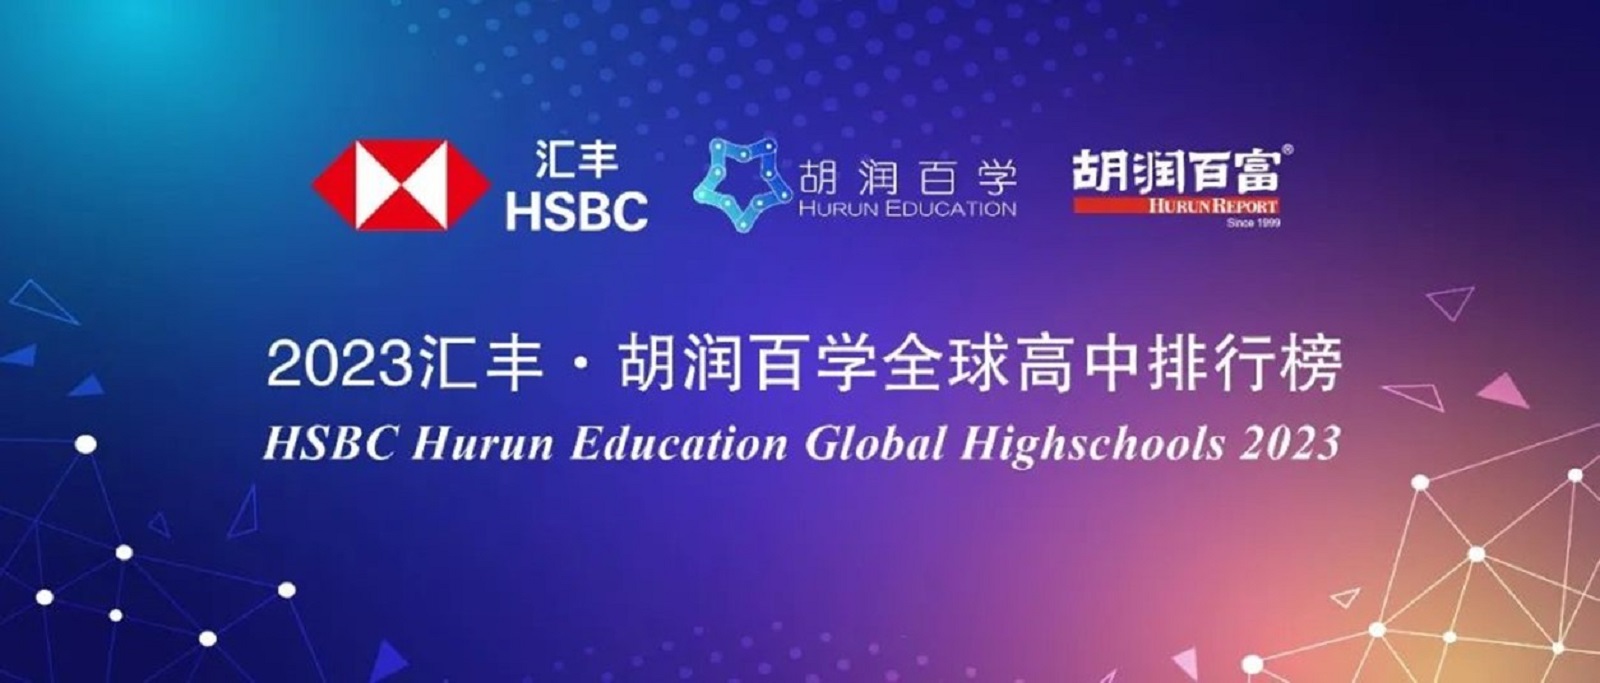 HSBC Hurun Education Global Highschools 2023